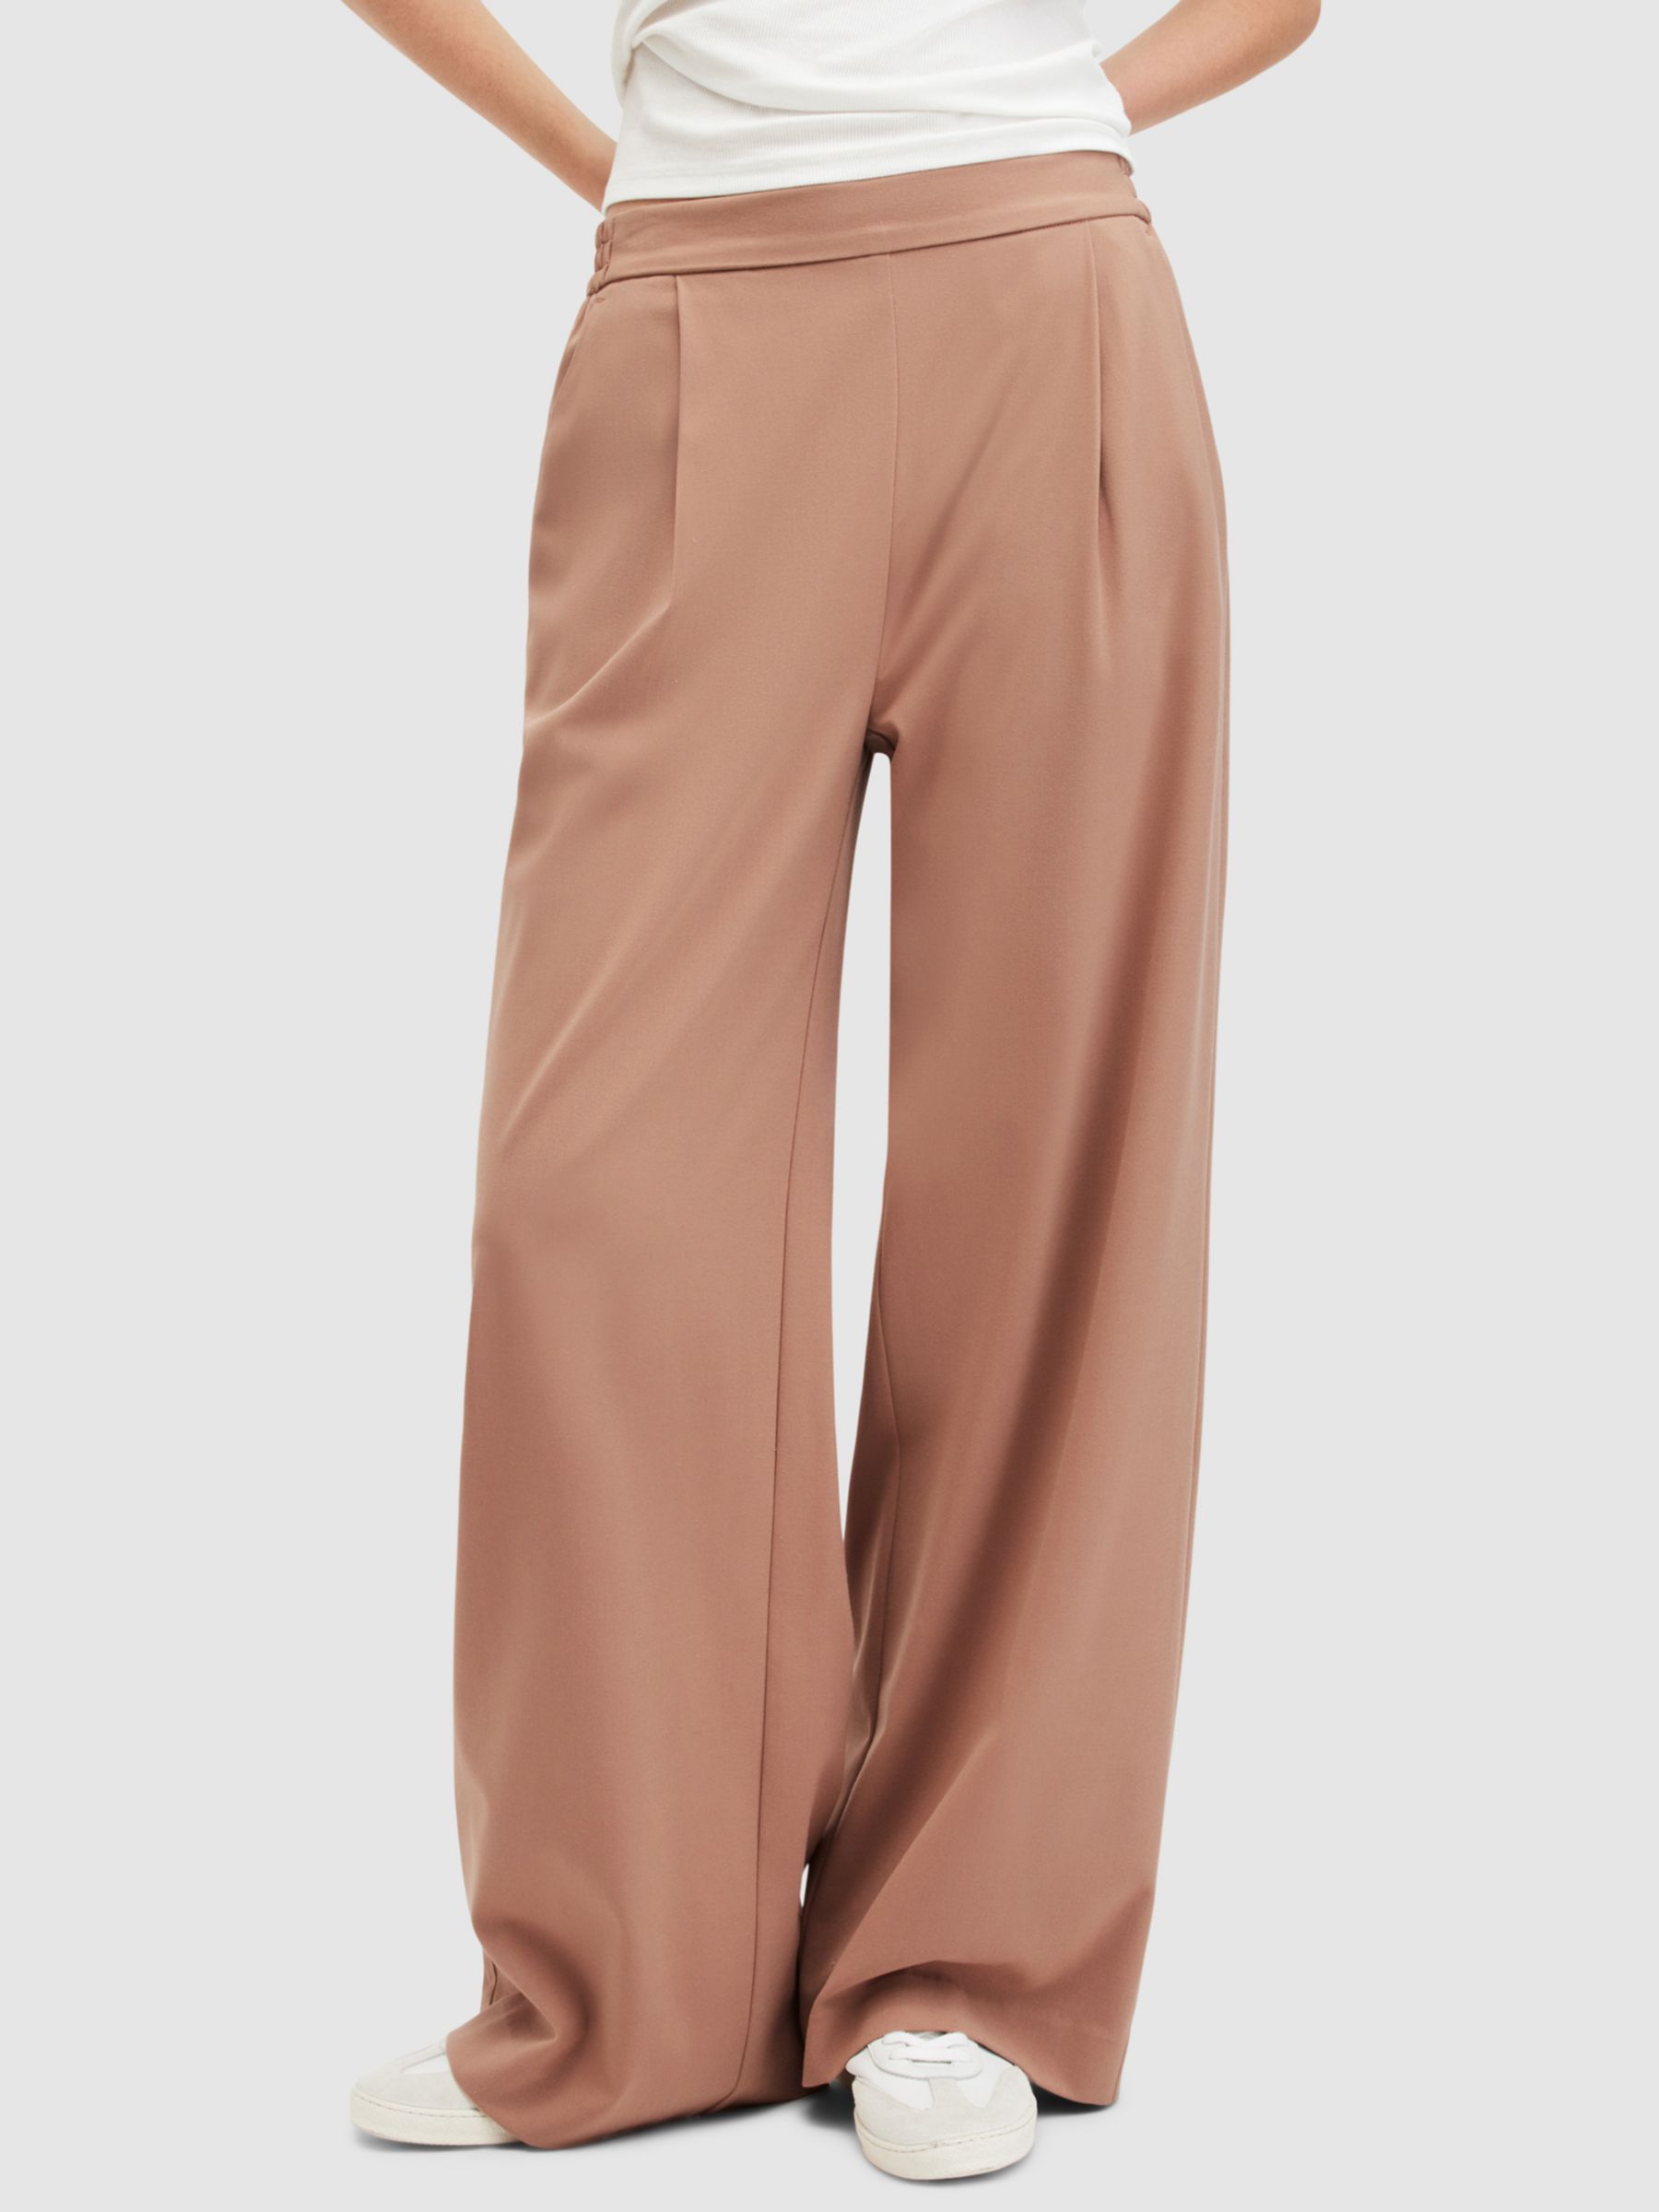 Women's Trousers & Leggings - Brown, Long